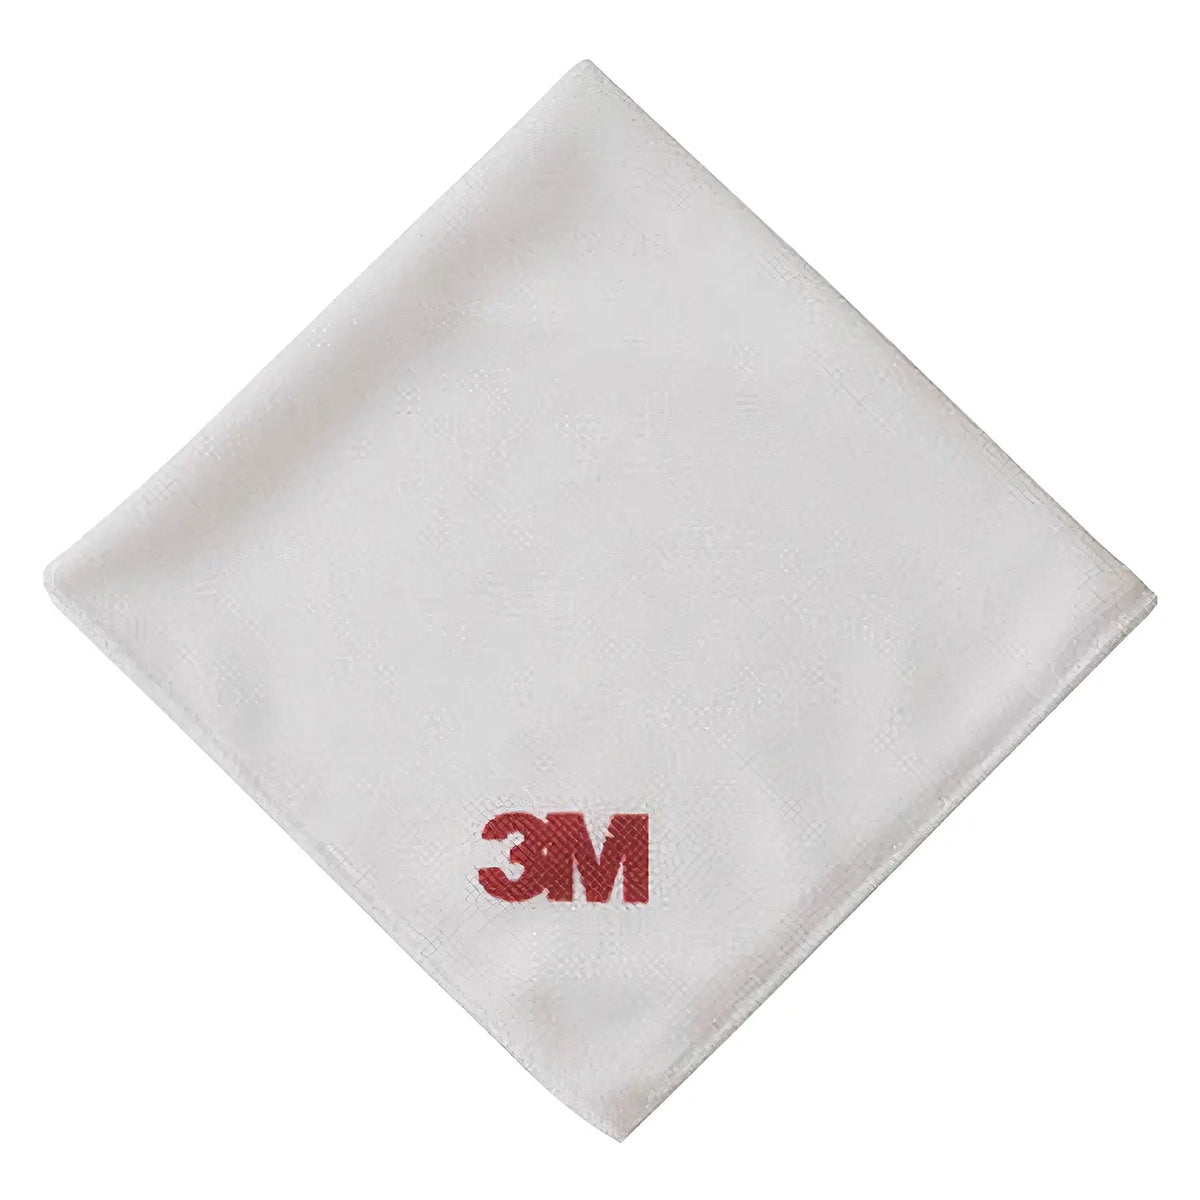 3M Scotch-Brite Nylon High-Durable Wiping Cloth